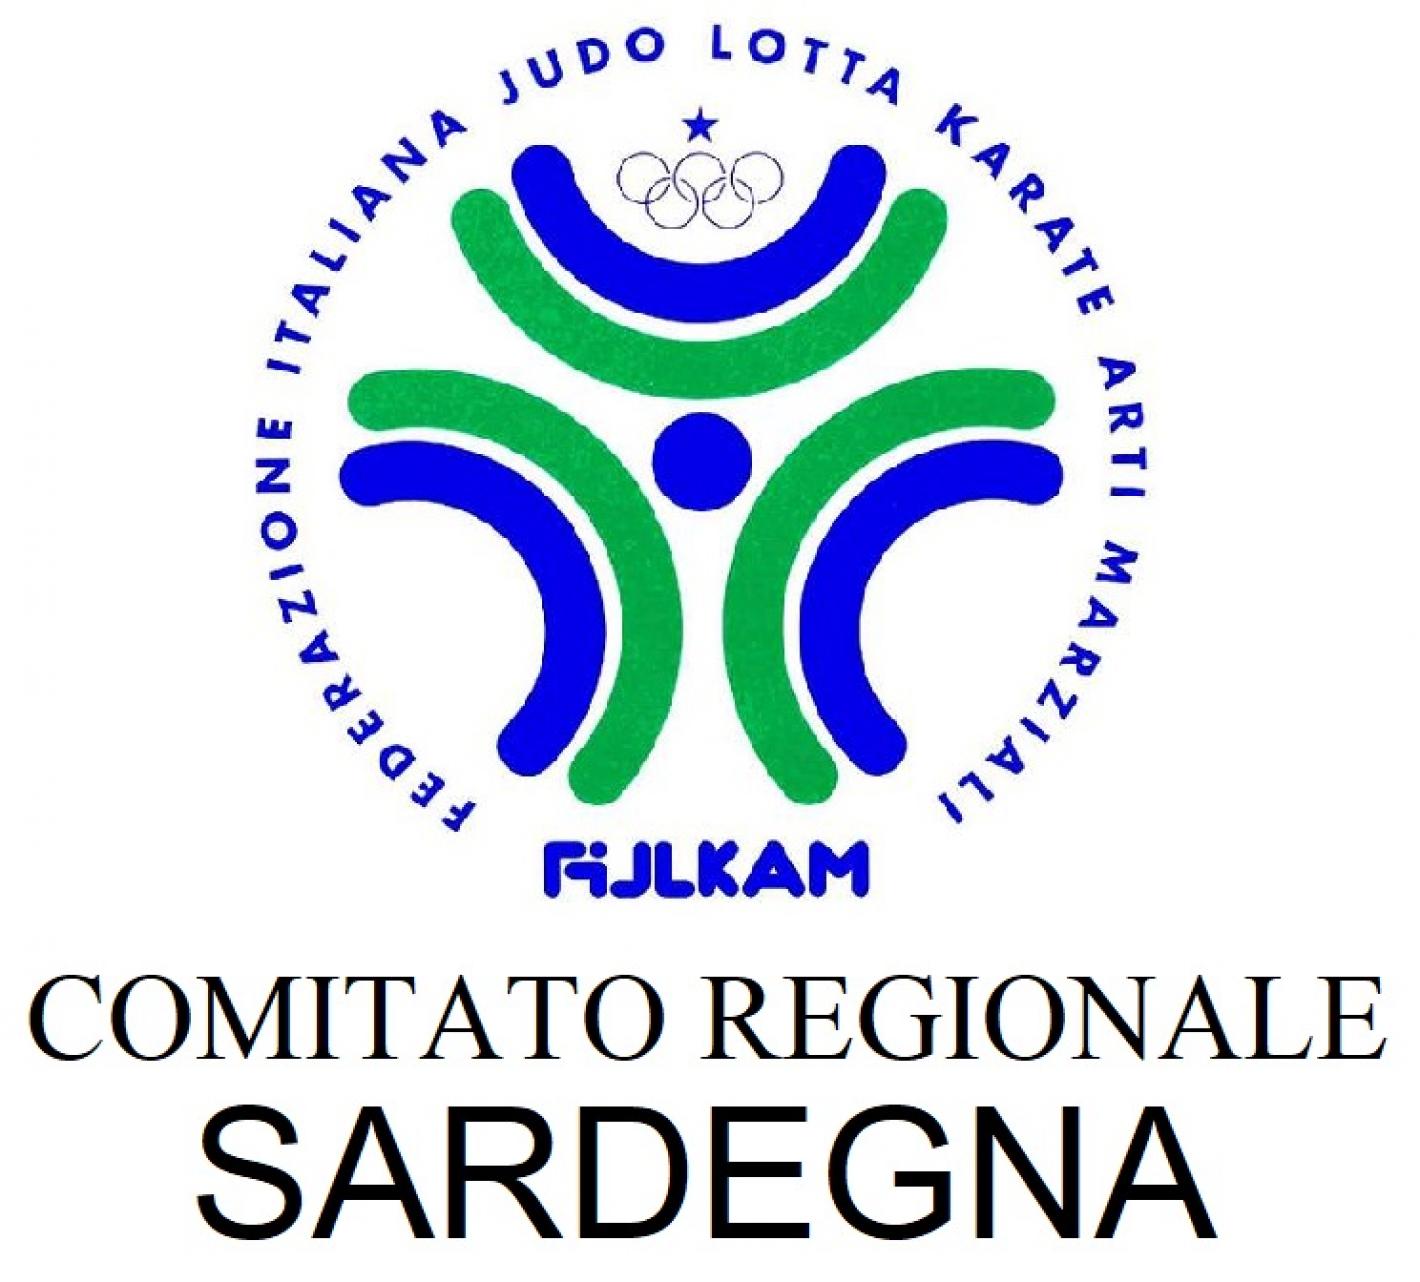 images/sardegna/News/medium/Comitato_Regionale_Sardegna.jpg